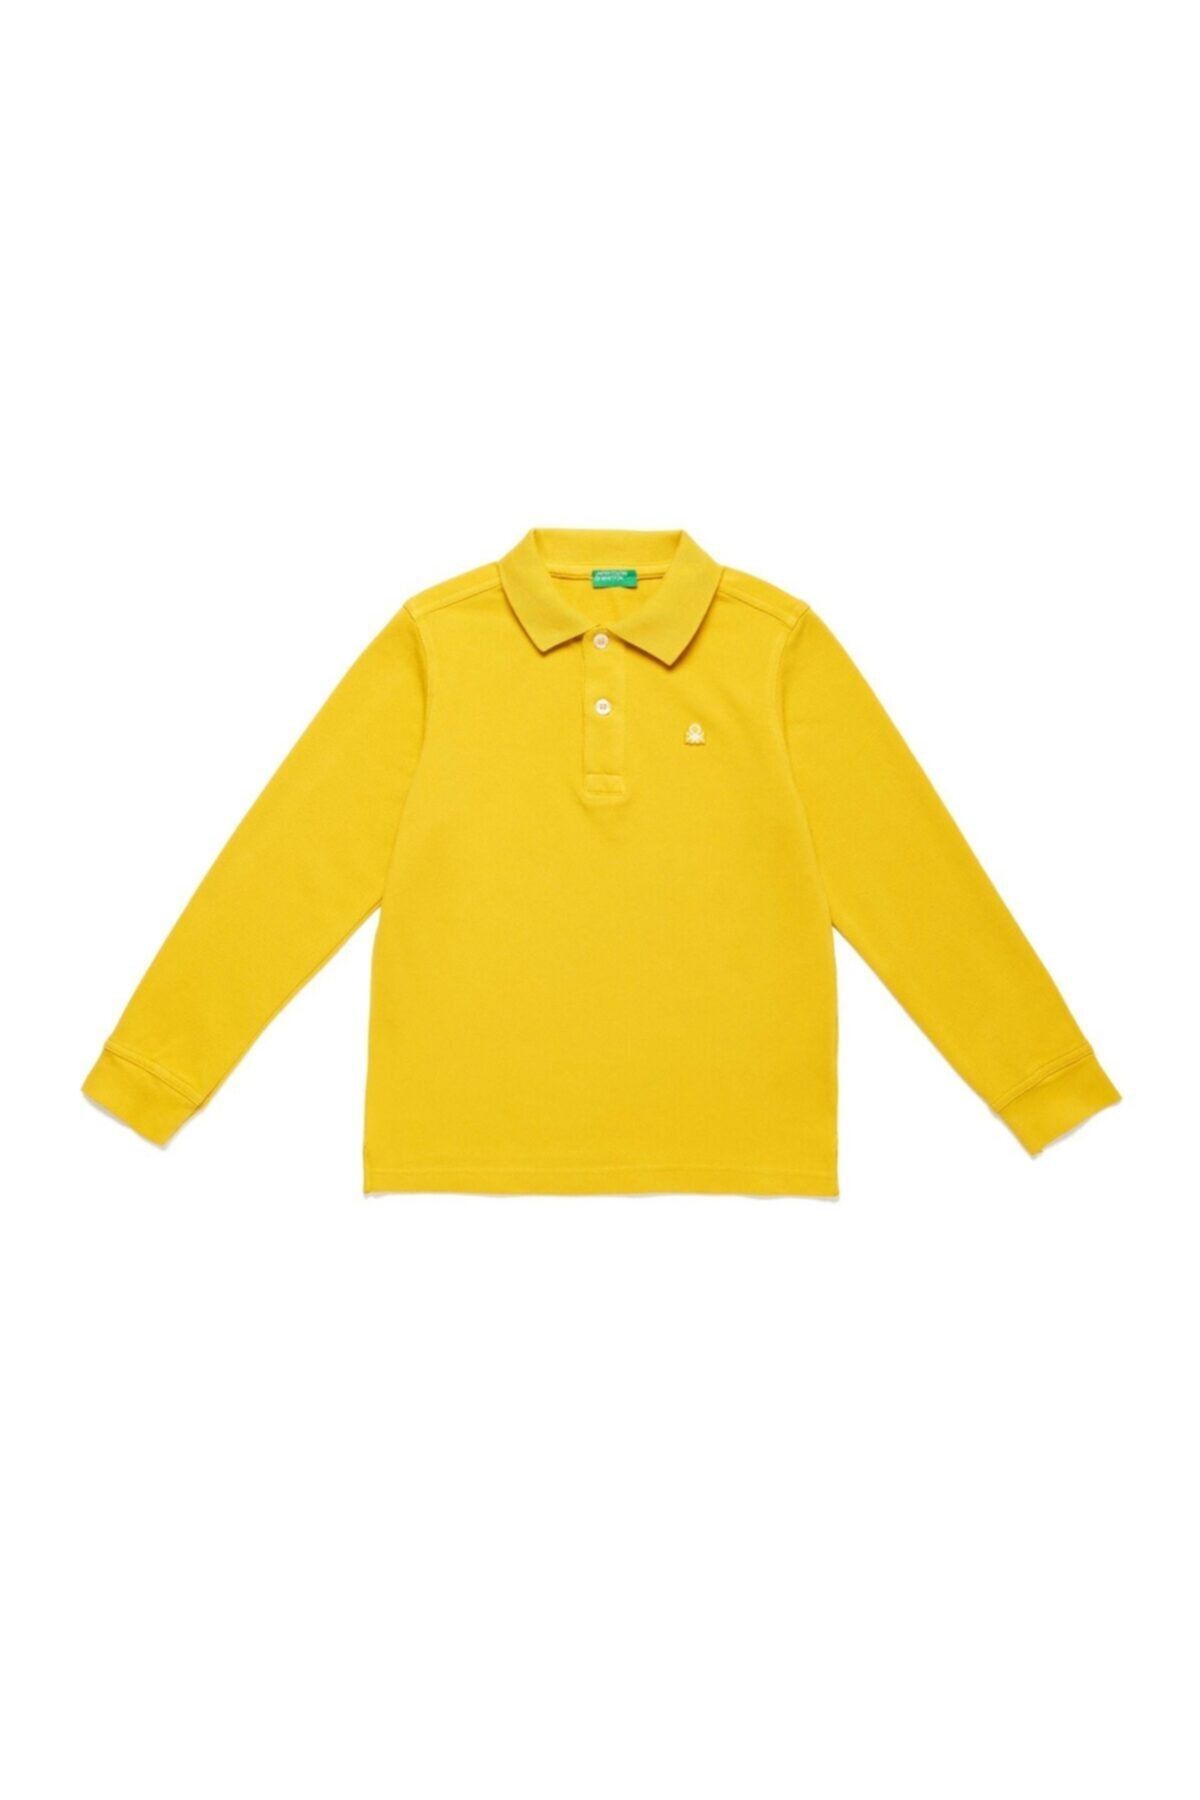 United Colors of Benetton Erkek Çocuk Sarı Logo Pike Polo Tshirt 012